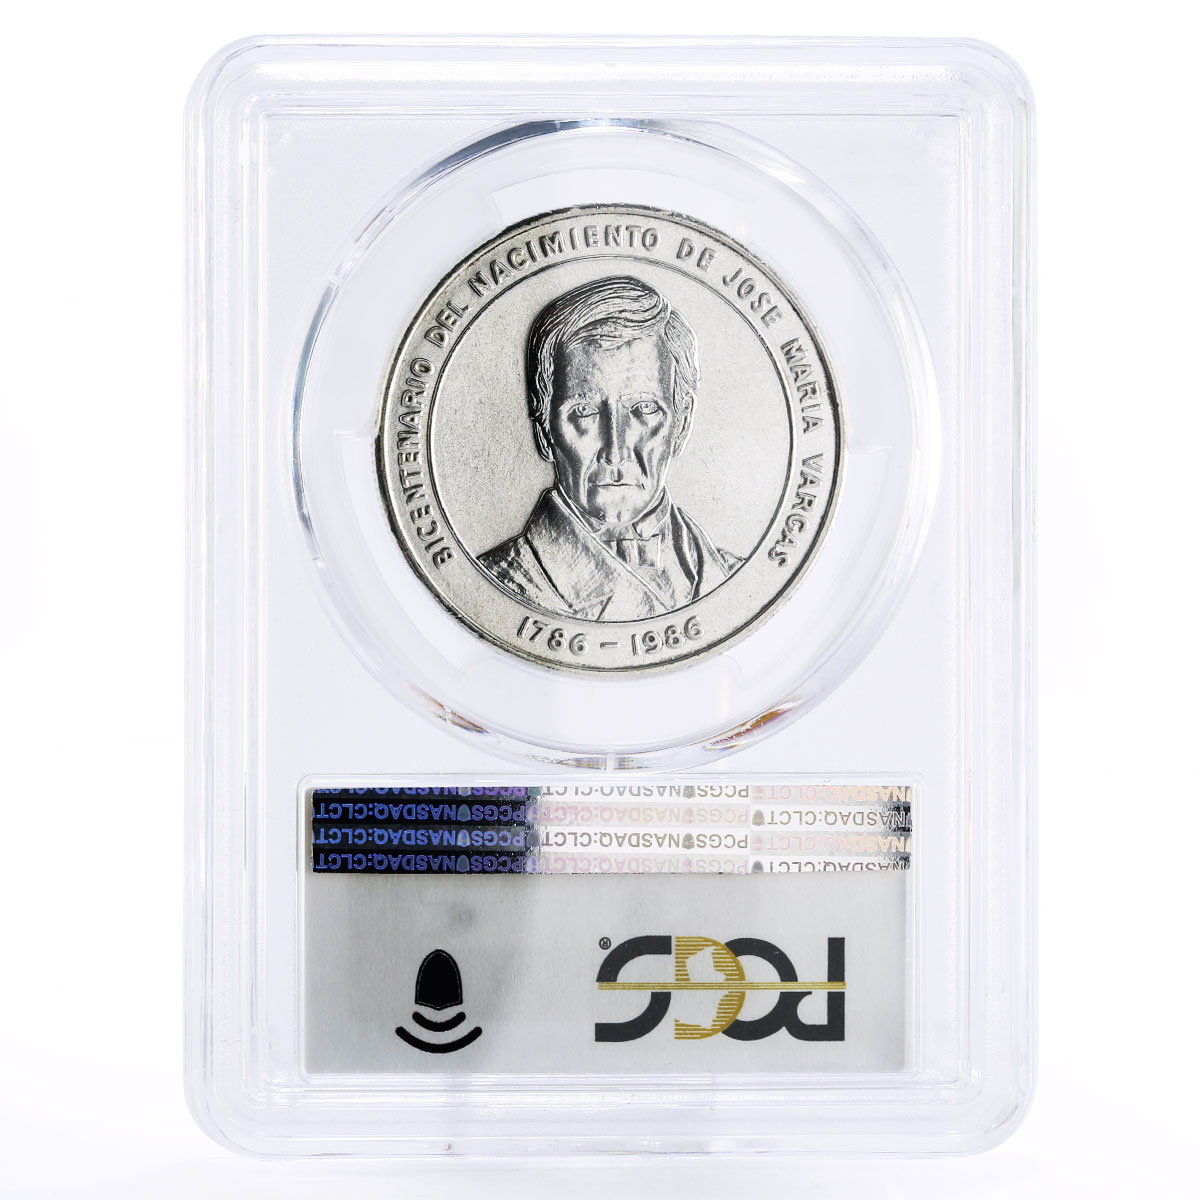 Venezuela 100 bolivares Birthday of Jose Maria Vargas MS66 PCGS silver coin 1986